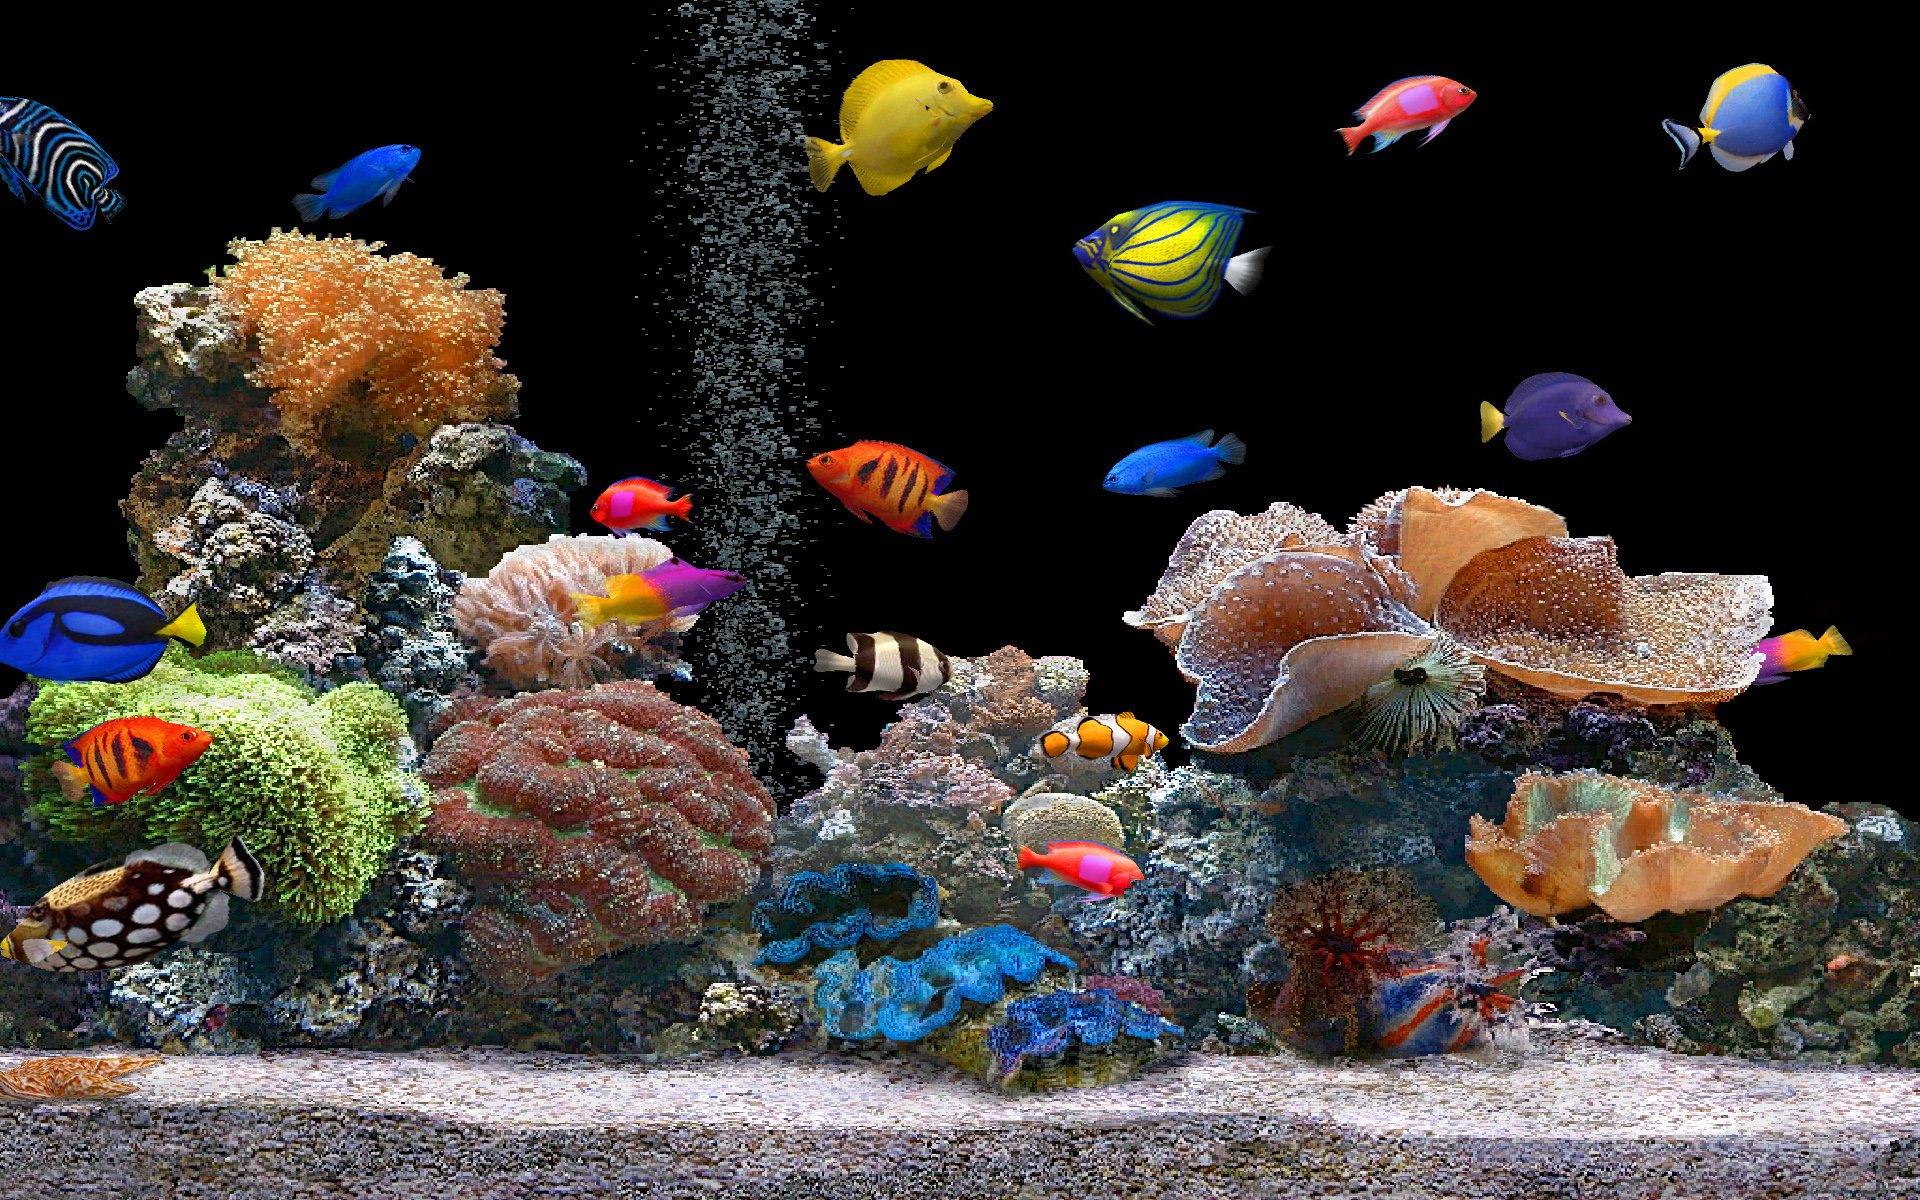 Aquarium Wallpaper Is Good For Filling Your Puter Desktop